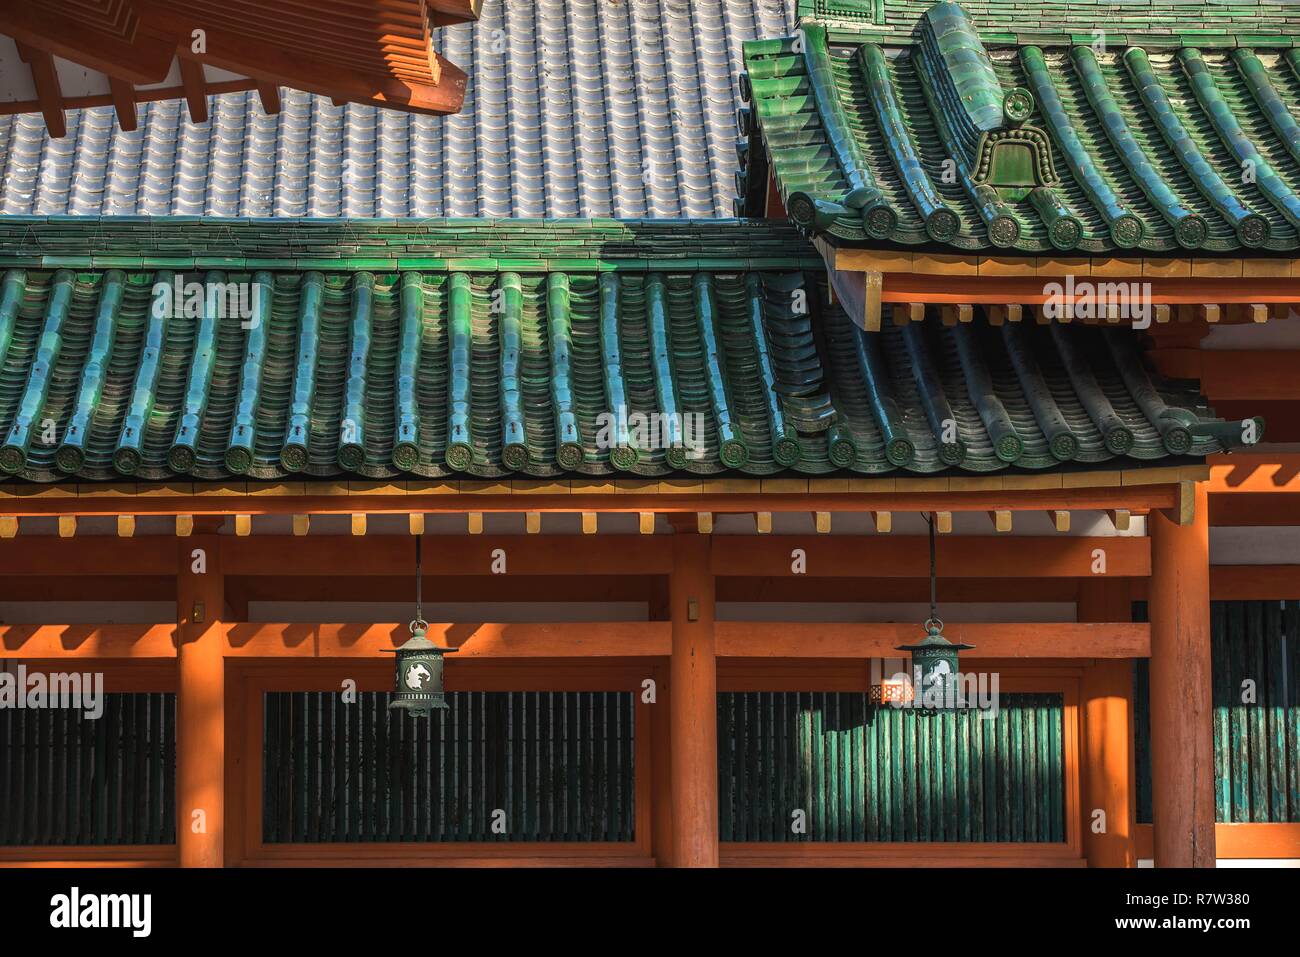 Giappone, isola di Honshu, Kyoto, Heian jingu-tempio è un tempio Shintoista in Kyoto Foto Stock